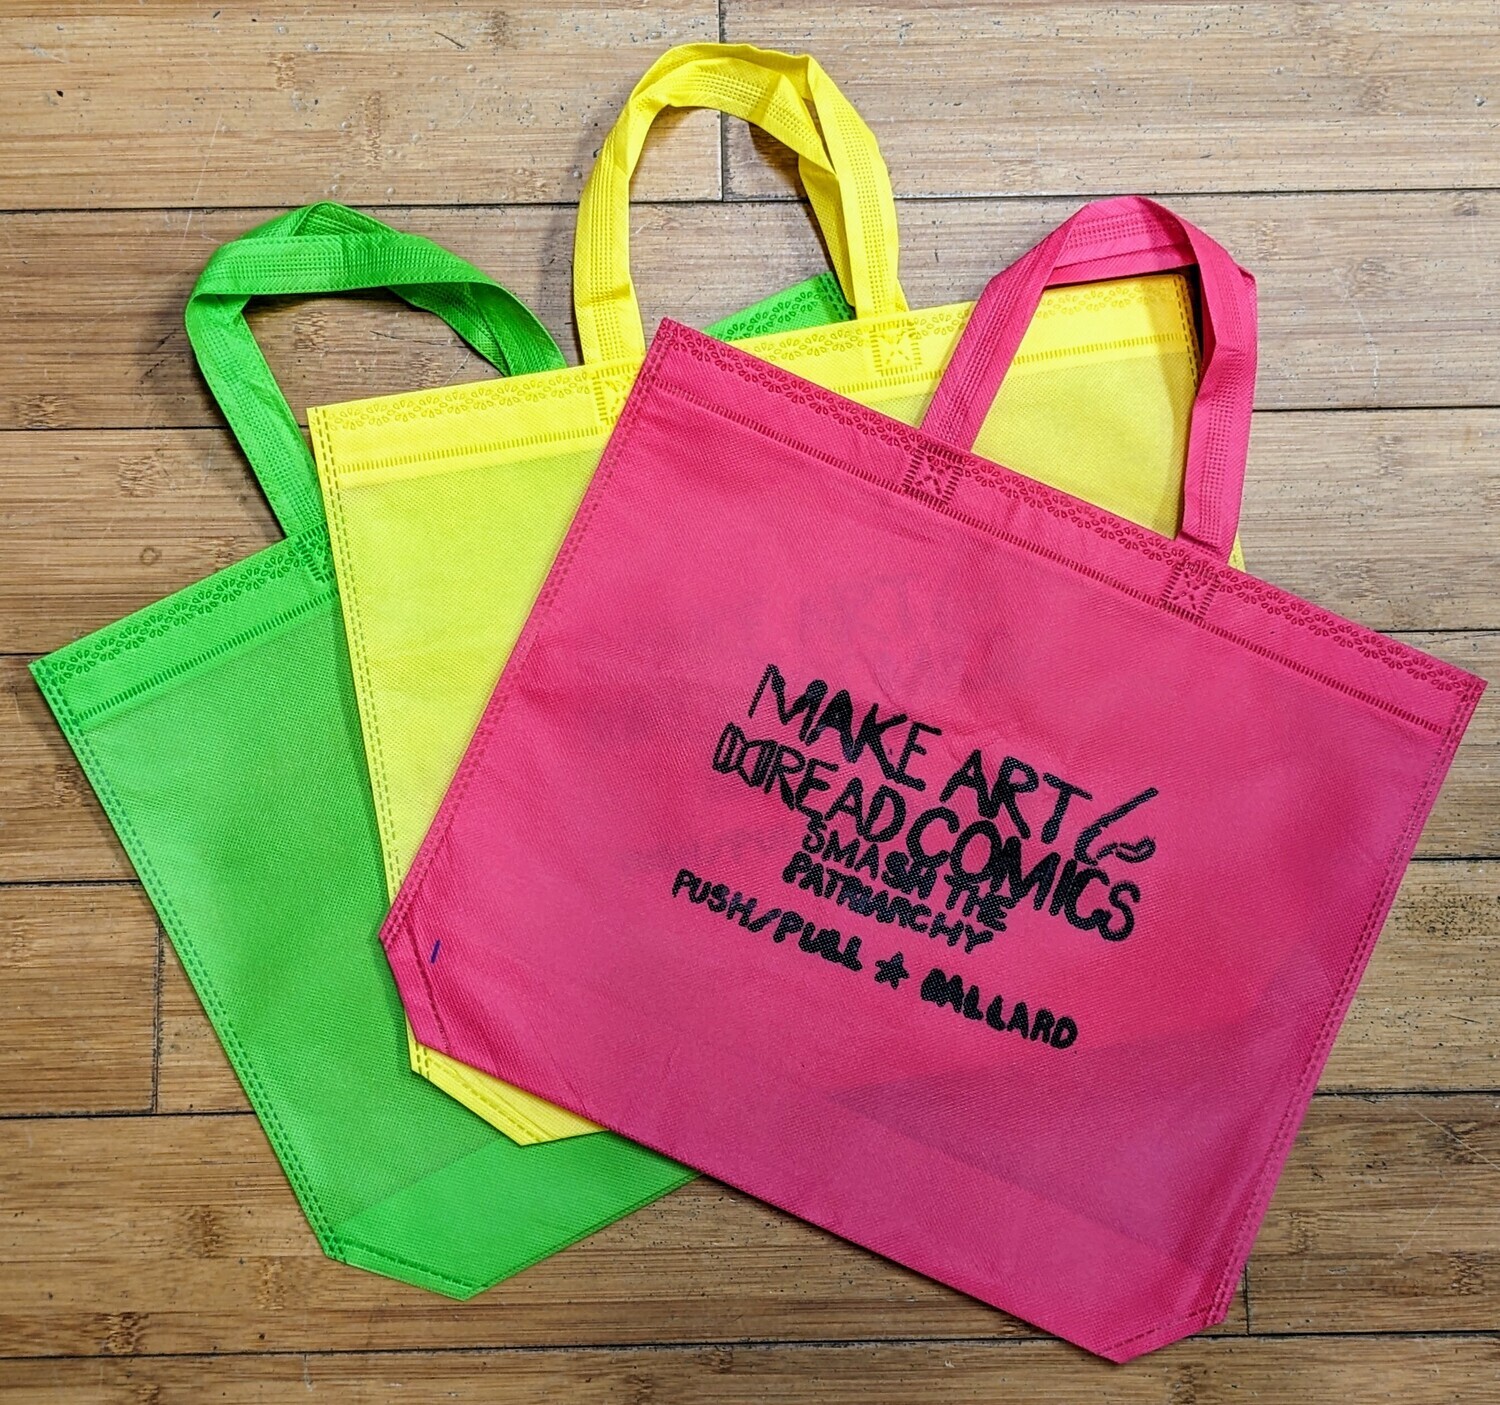 "Make Art, Read Comics" Reusable Bag by Push/Pull